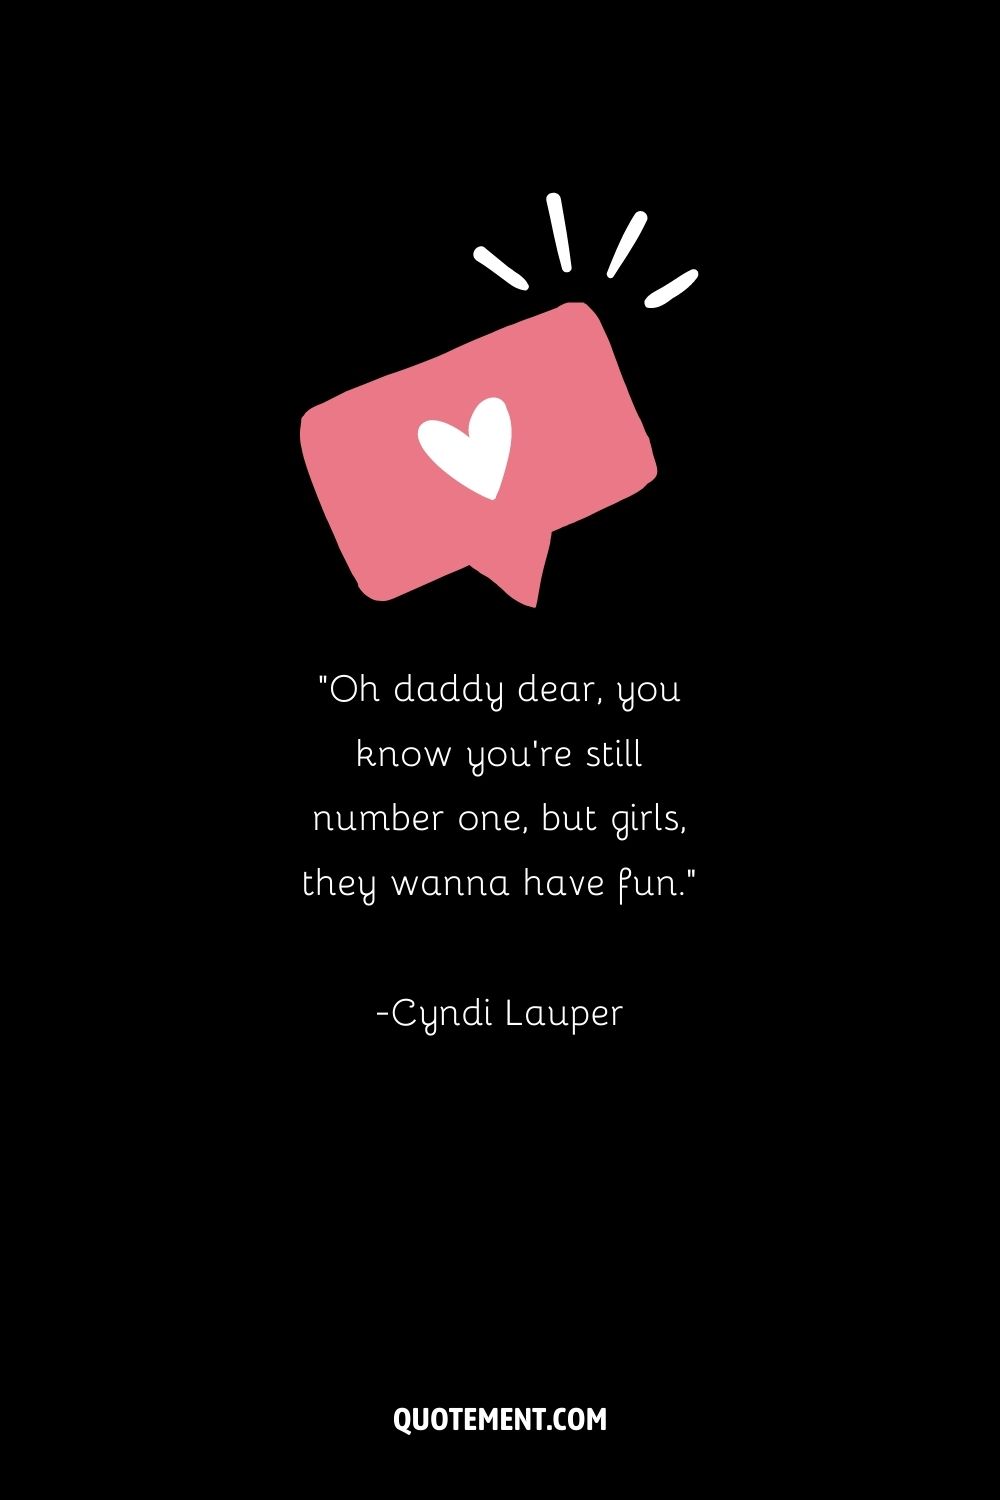 Lyrics by Cyndi Lauper as a cute caption idea and a pink notification